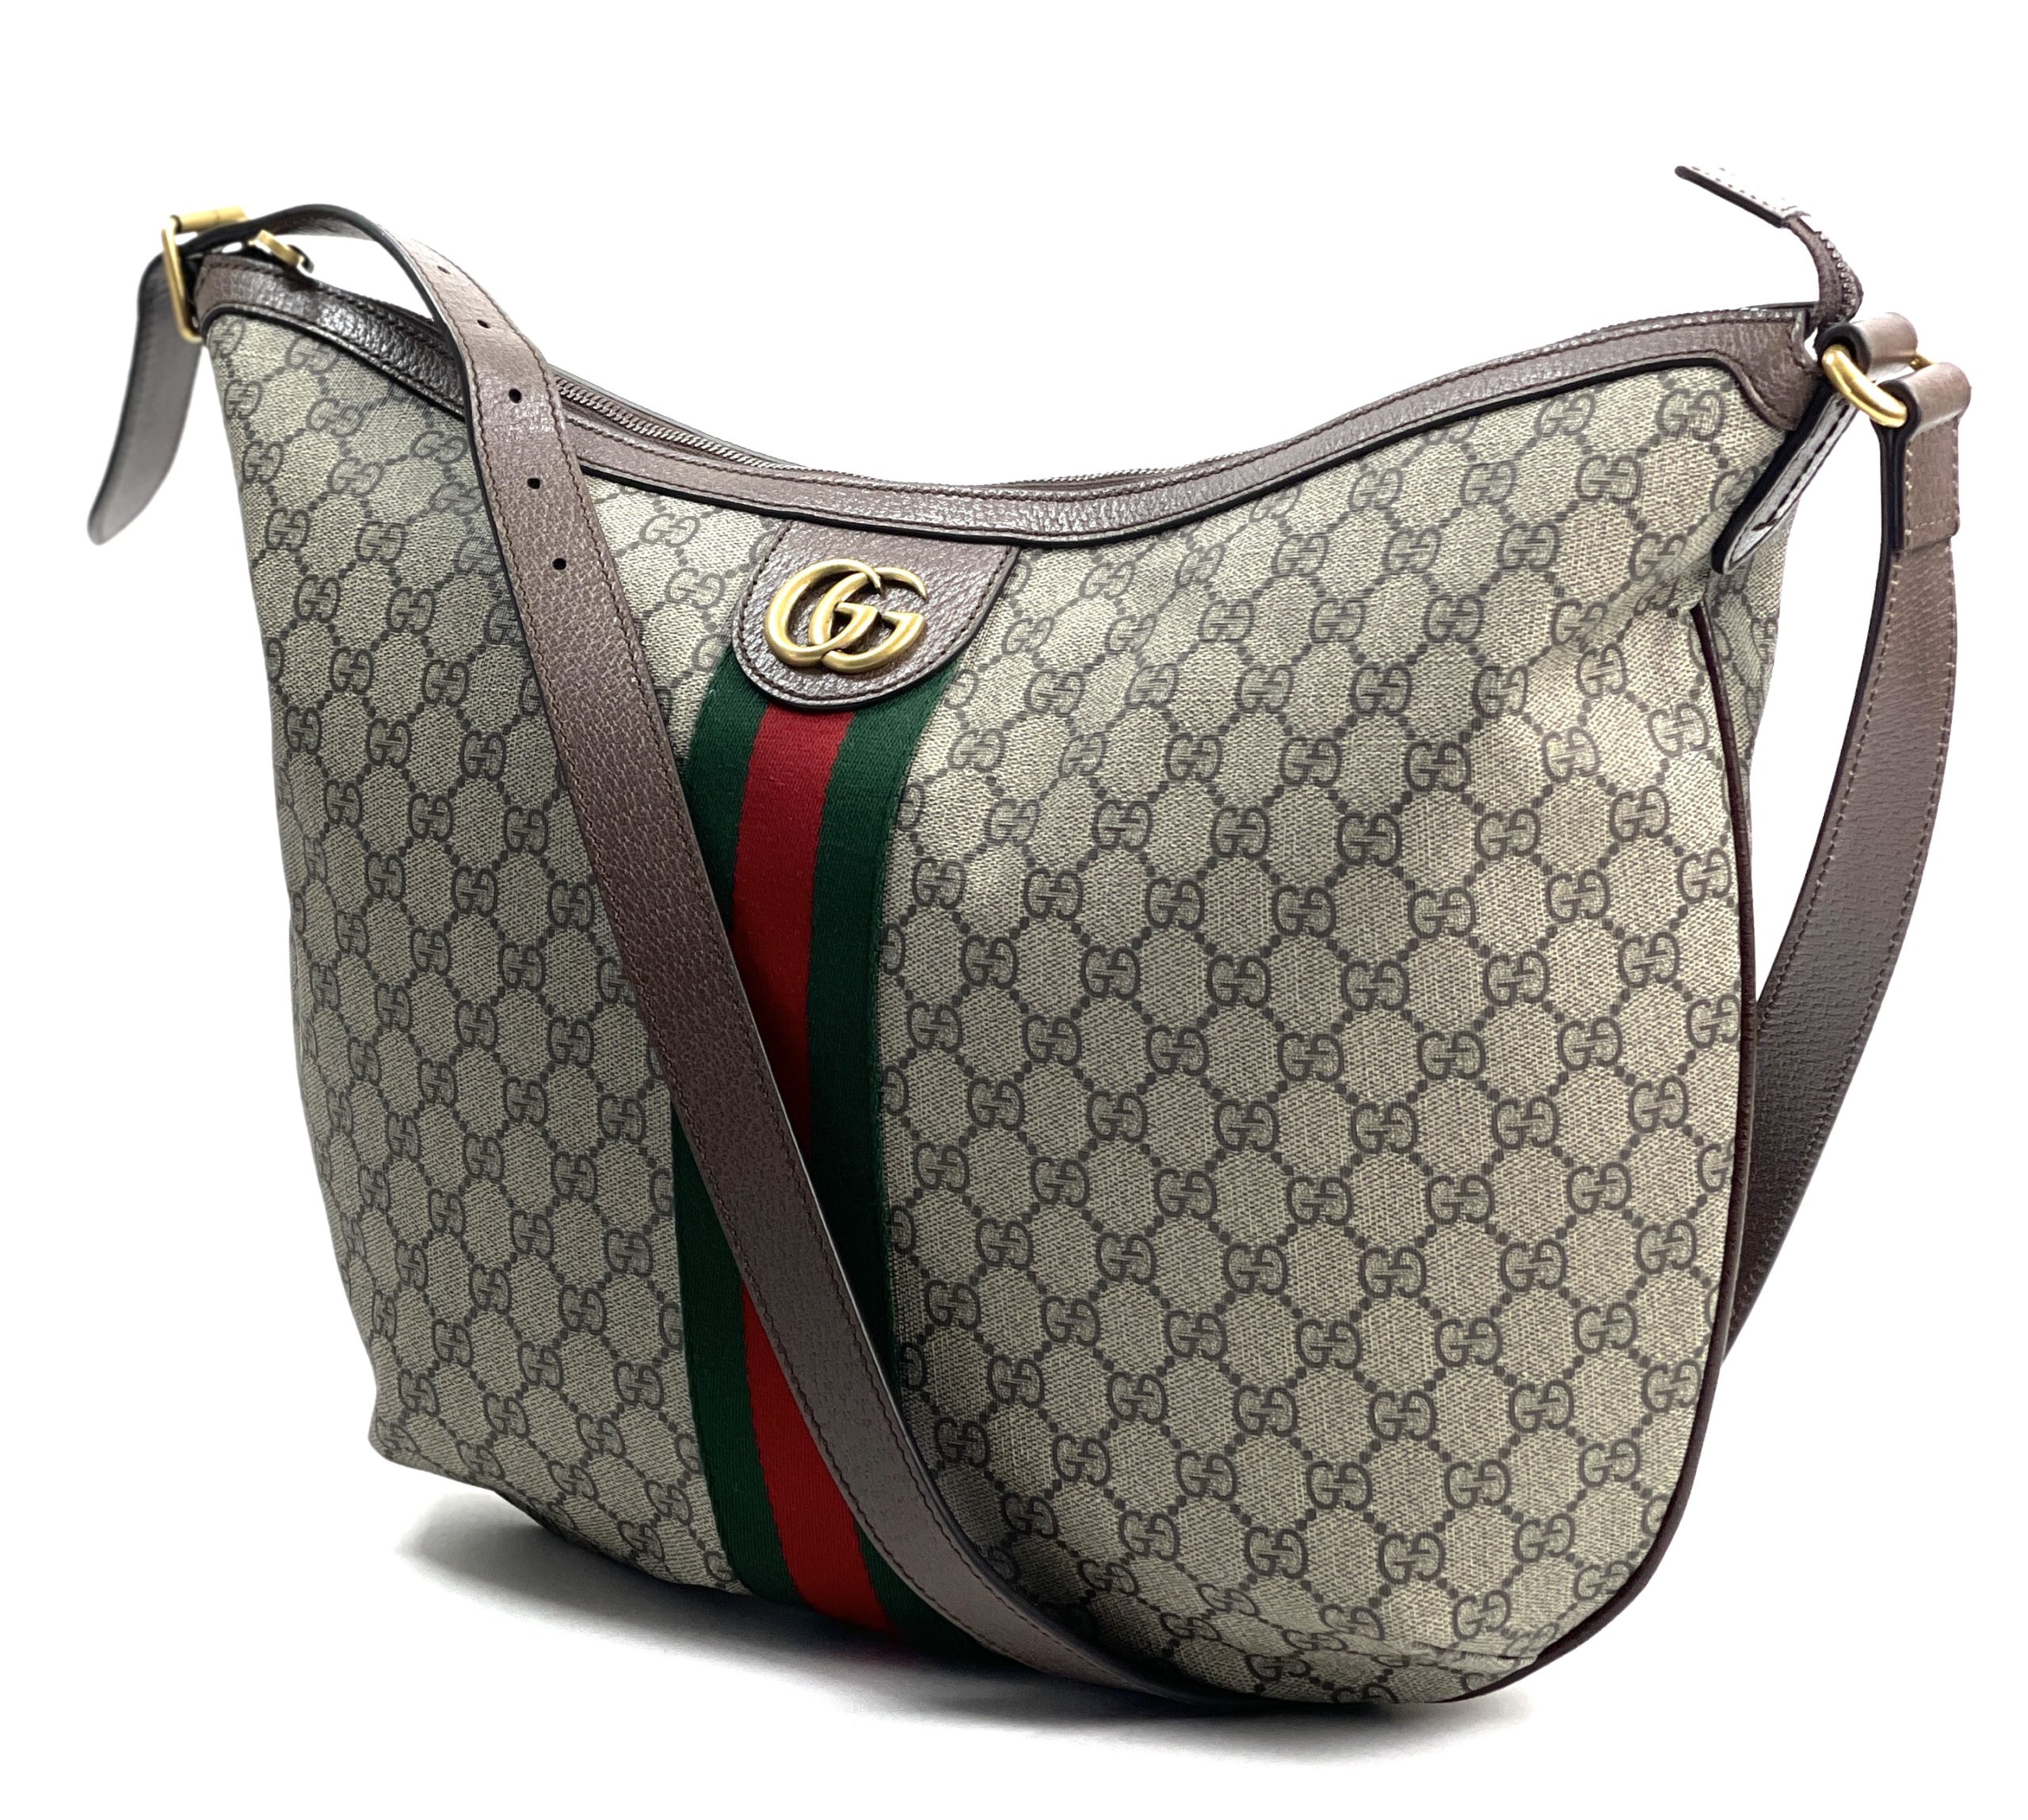 Gucci Women's 362968 Soft Suede Red Green Web Stripe Jackie Hobo Handbag :  Amazon.com.au: Clothing, Shoes & Accessories